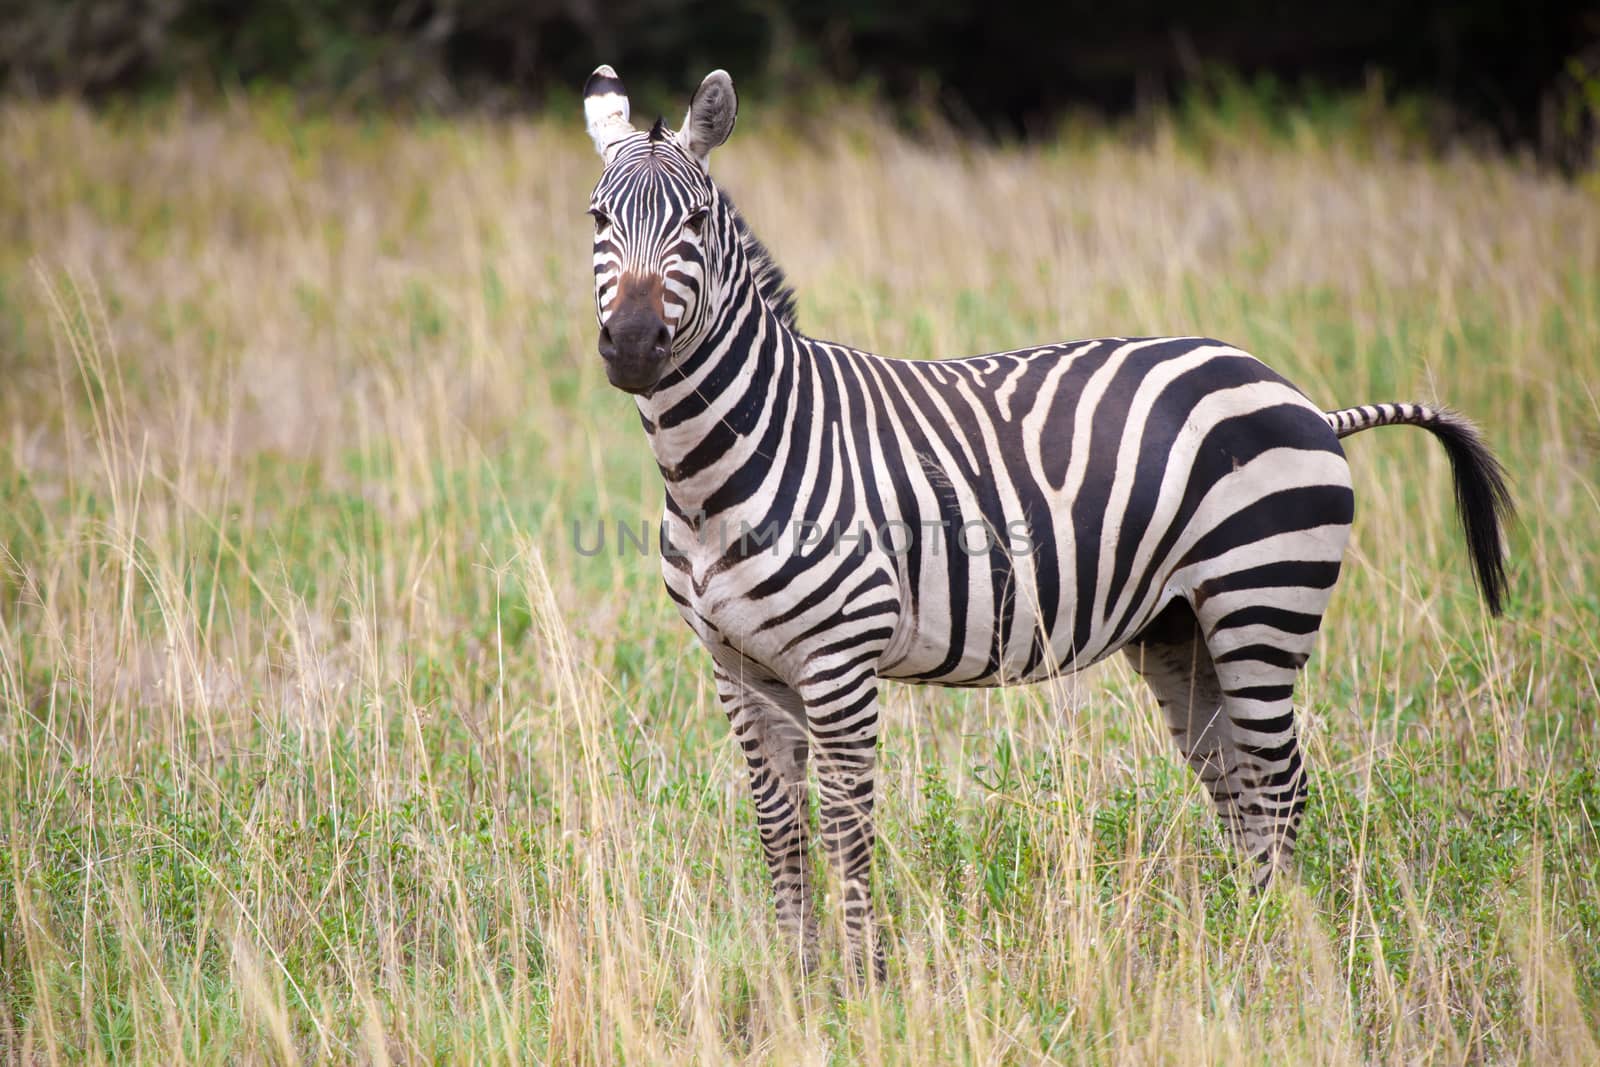 Zebra standing in the grassland in Kenya by 25ehaag6